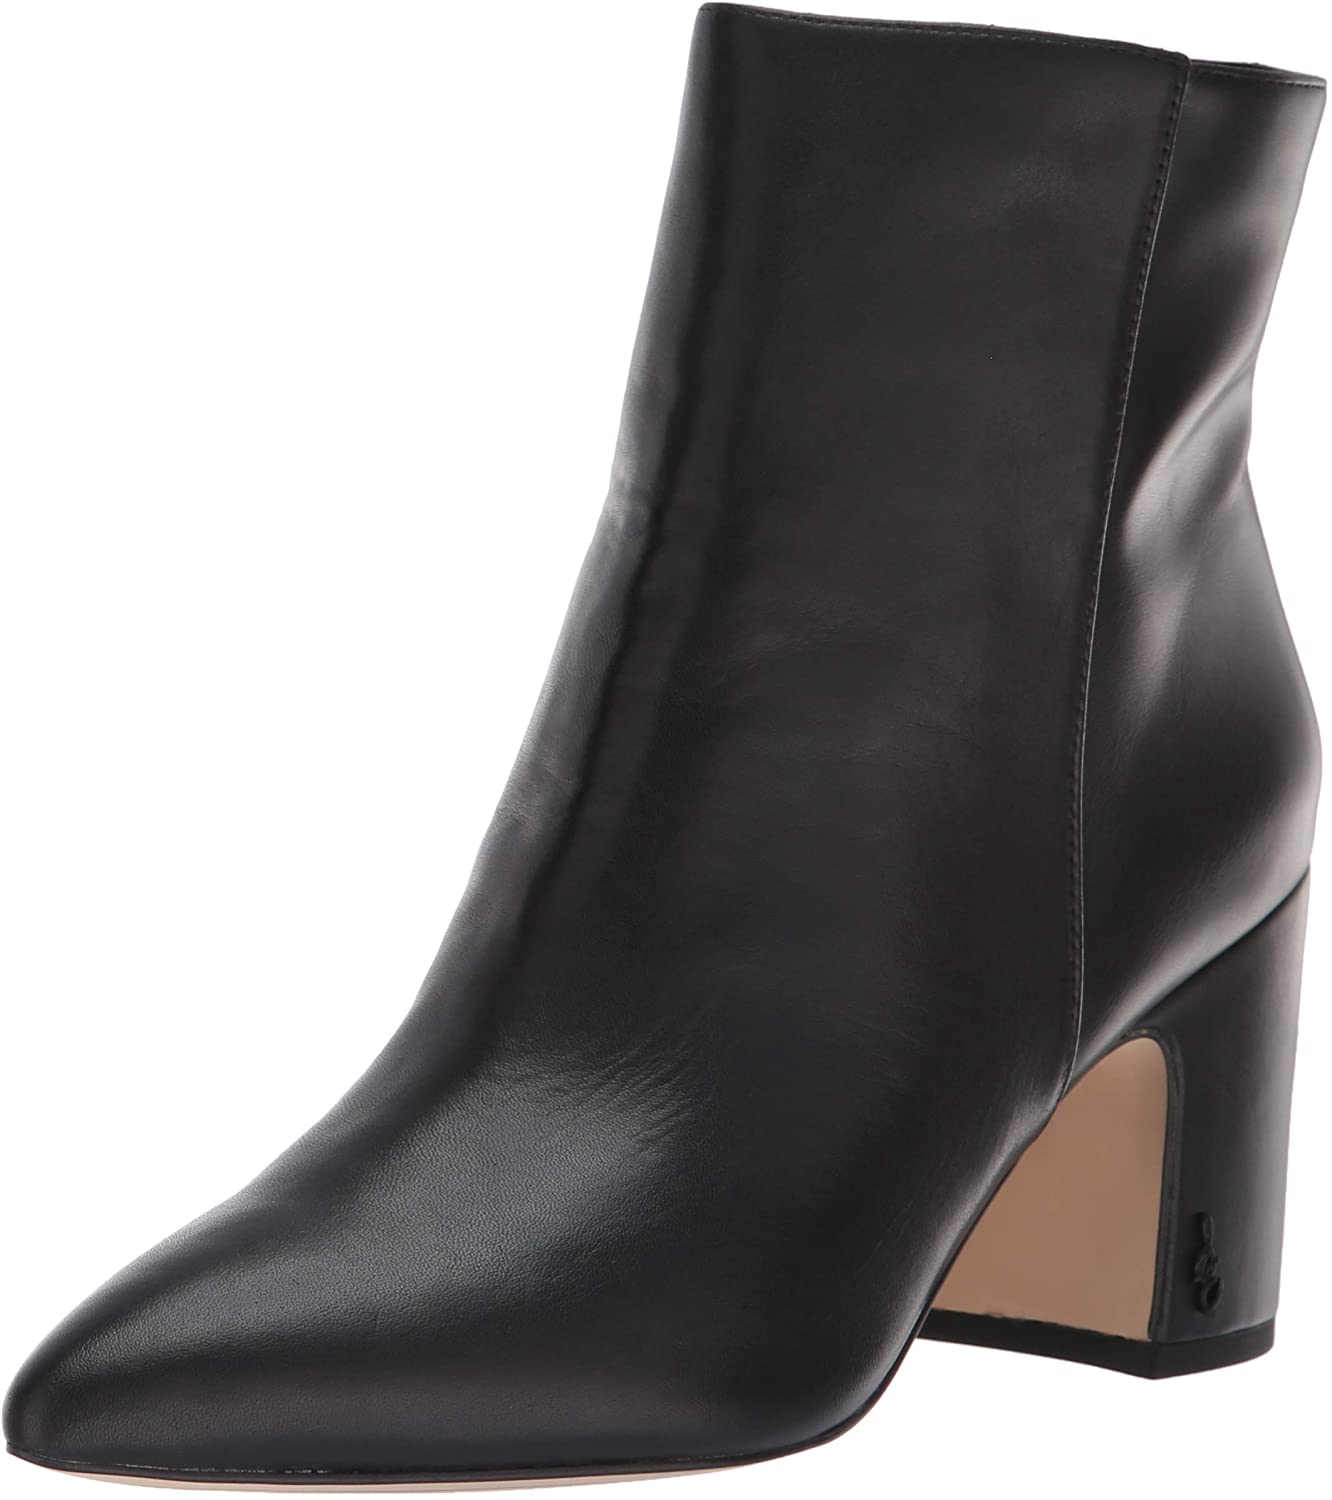 Sam Edelman Women's Hilty Ankle Boot, Black Leather, Size 11.0 ChbB | eBay